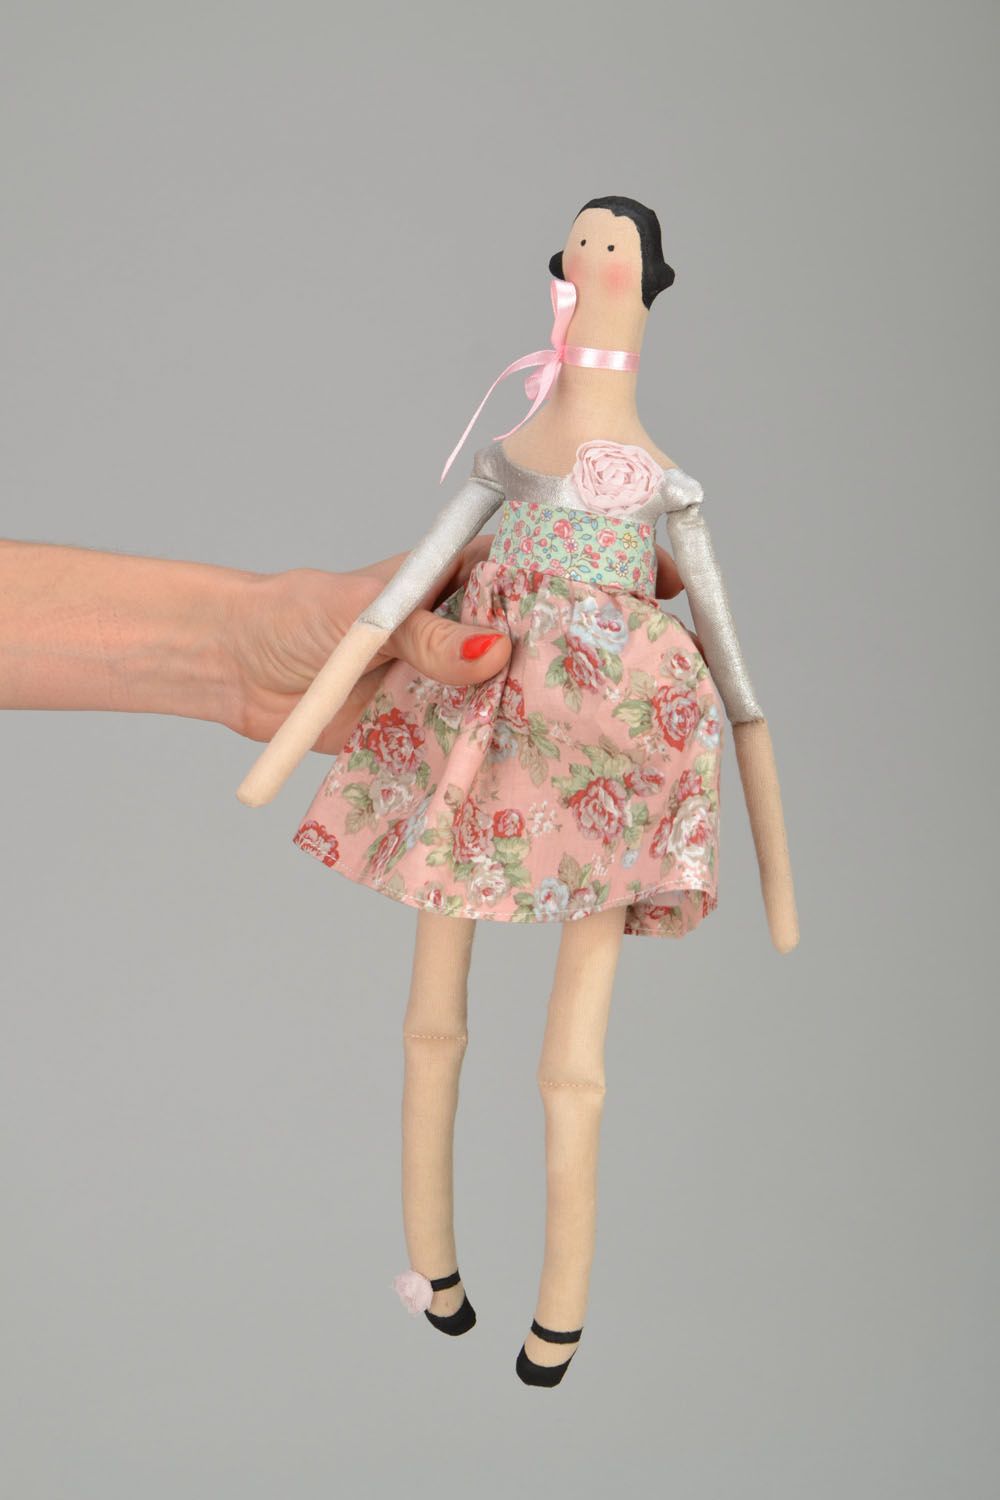 Designer doll in a dress photo 2